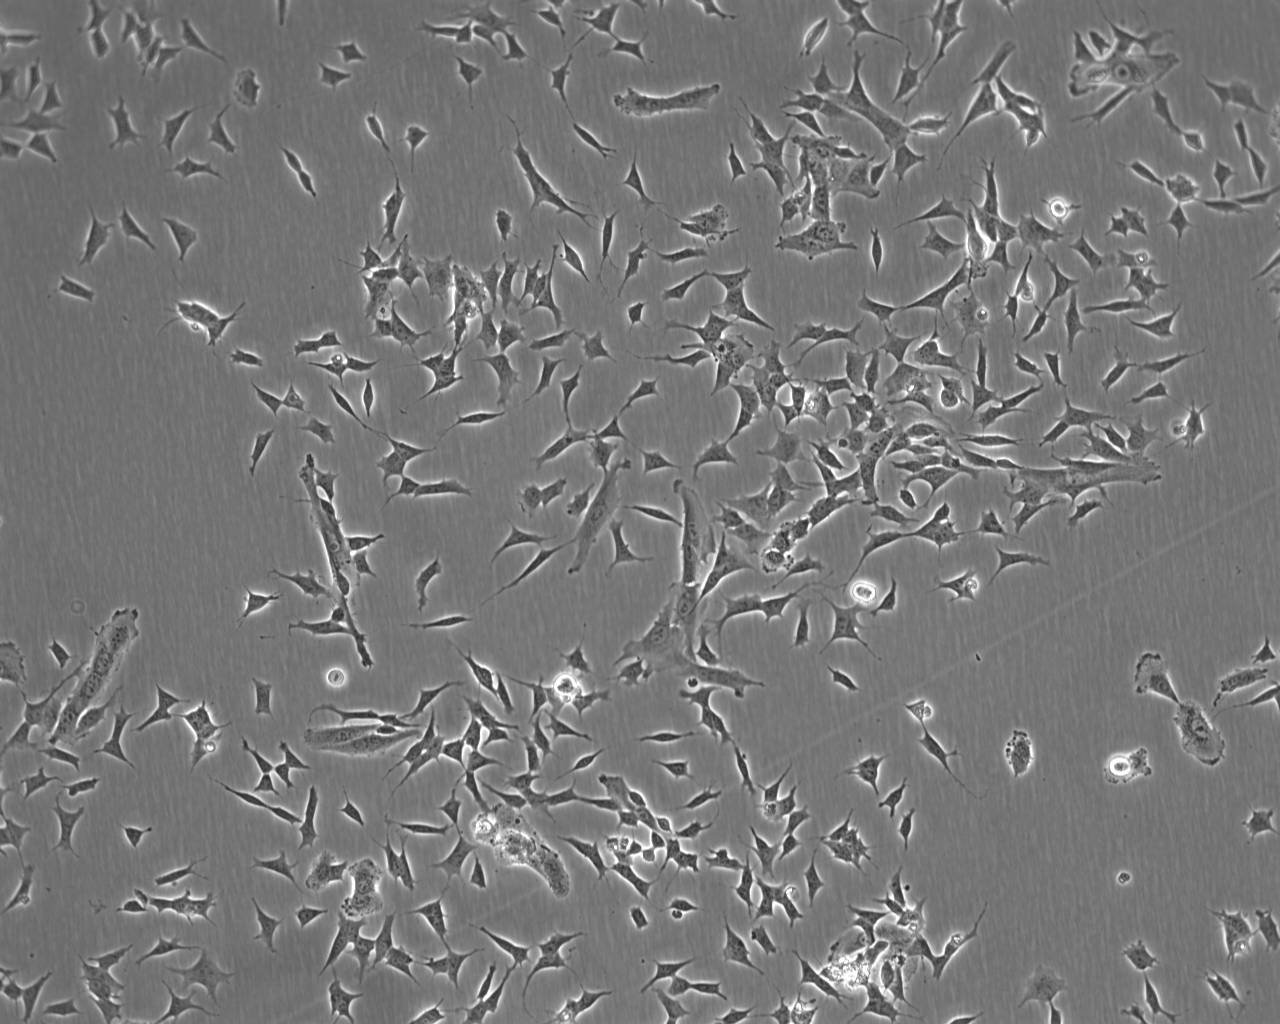 FRTL-5 Cells|大鼠甲状腺可传代细胞系,FRTL-5 Cells